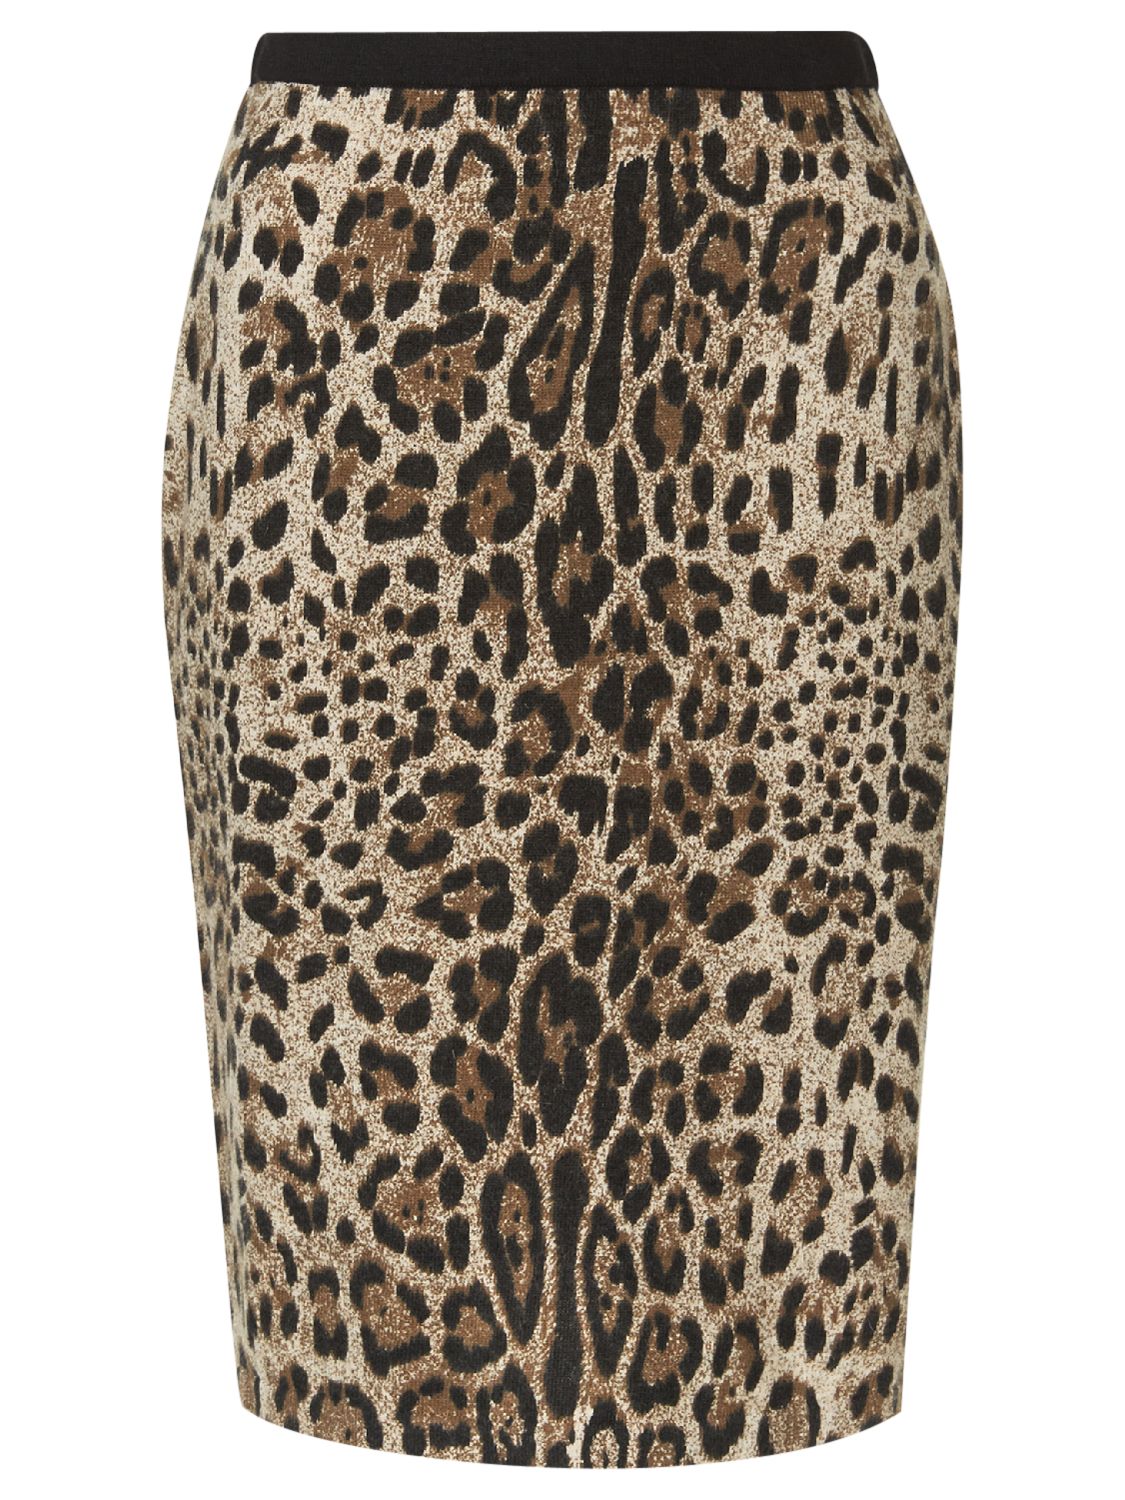 Precis Petite Animal Print Skirt, Multi Brown at John Lewis & Partners